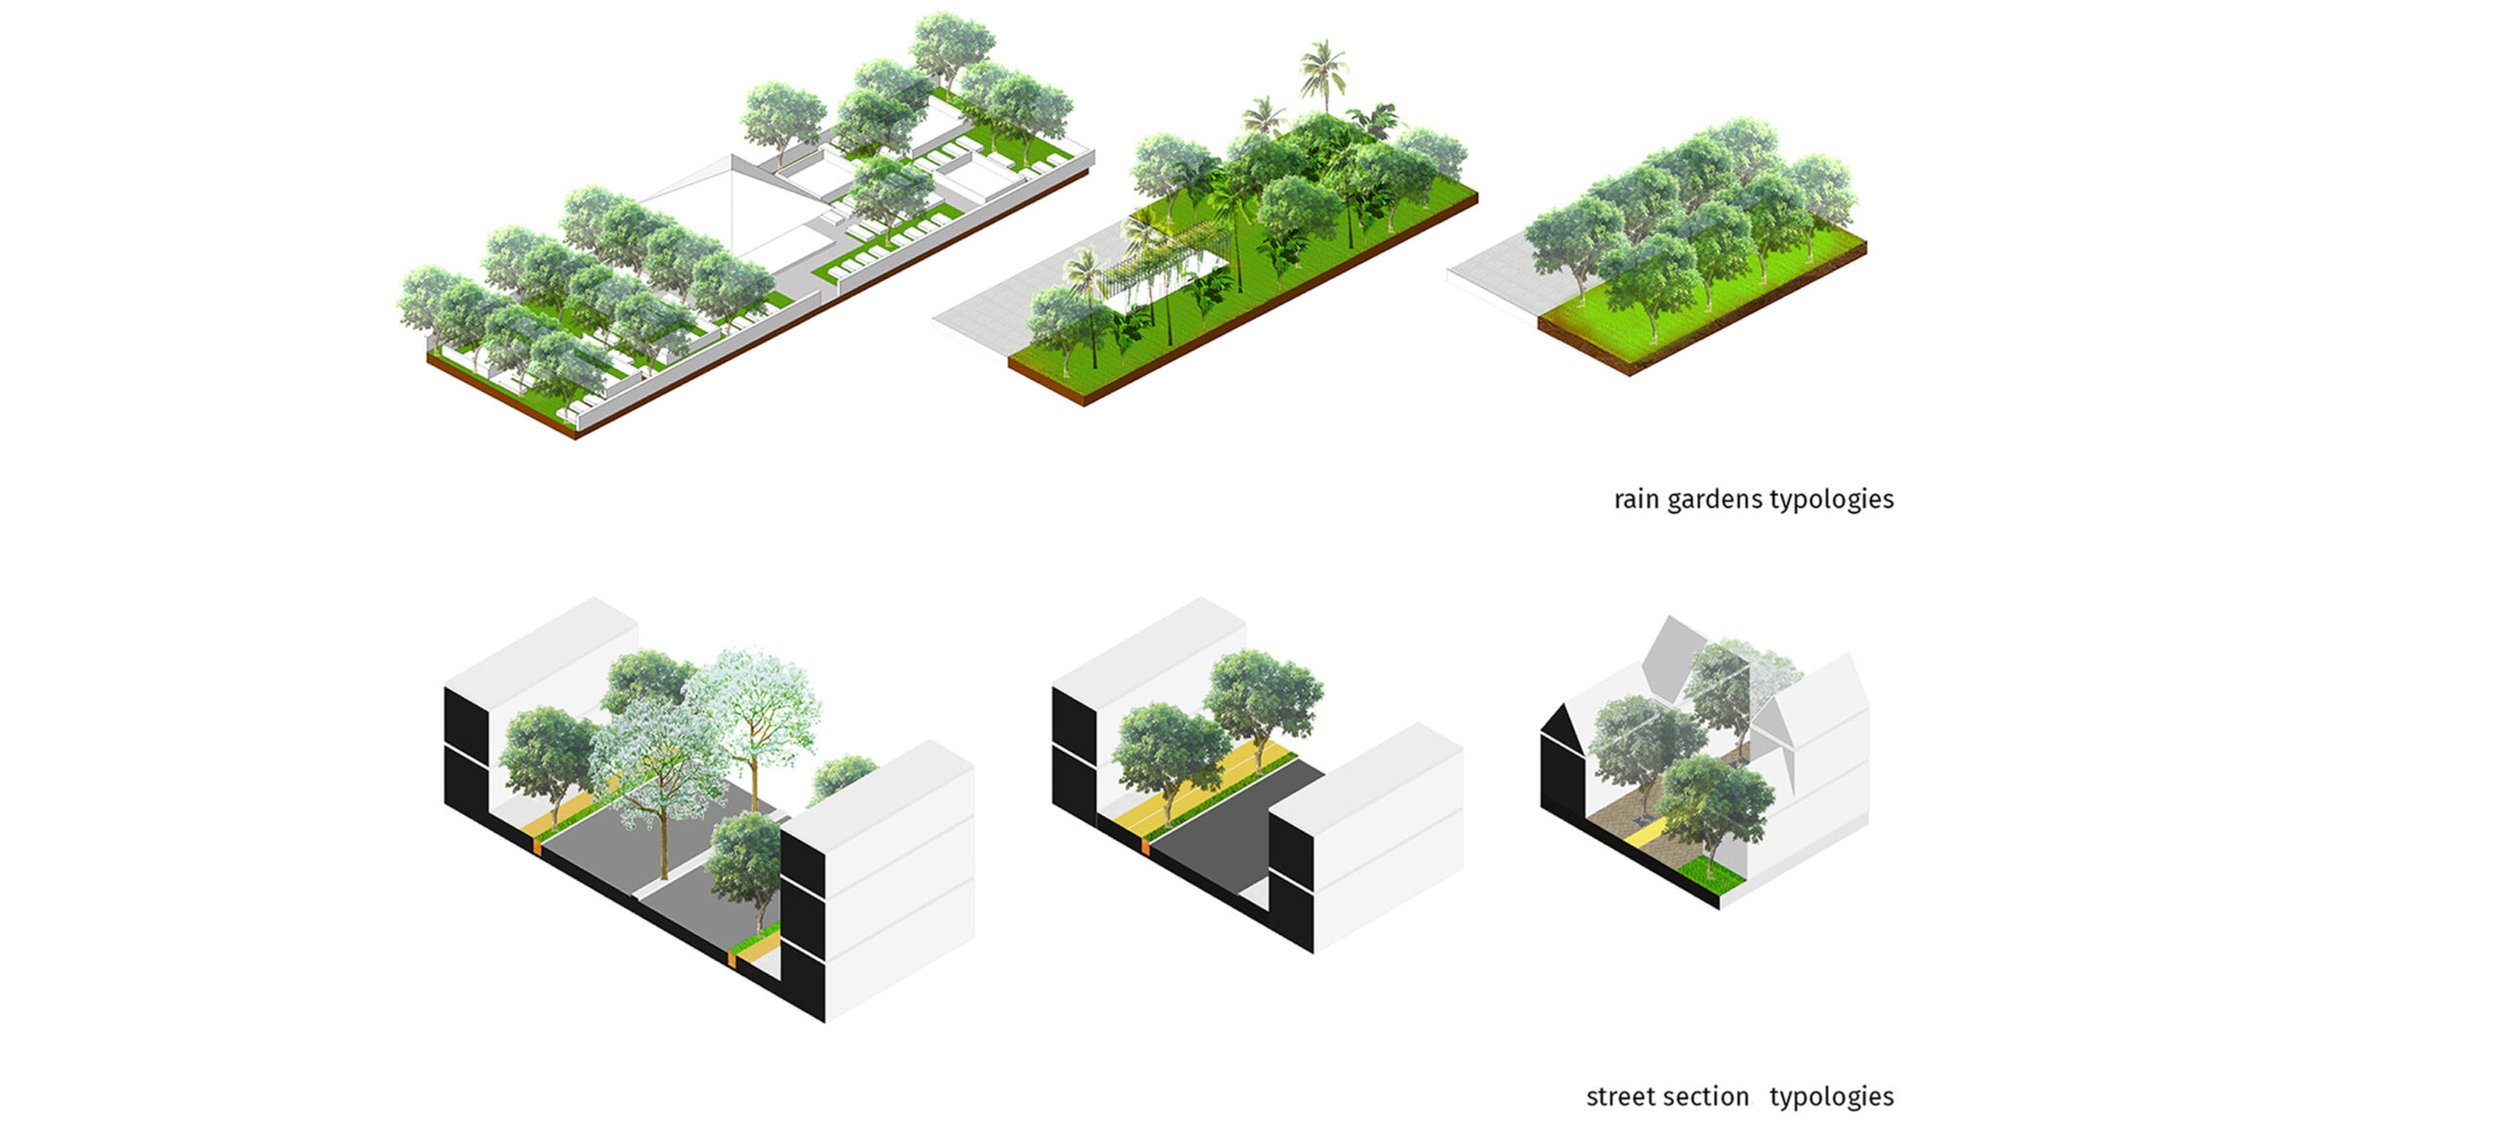 Yogyakarta Rain Gardens and Street Section Typologies.